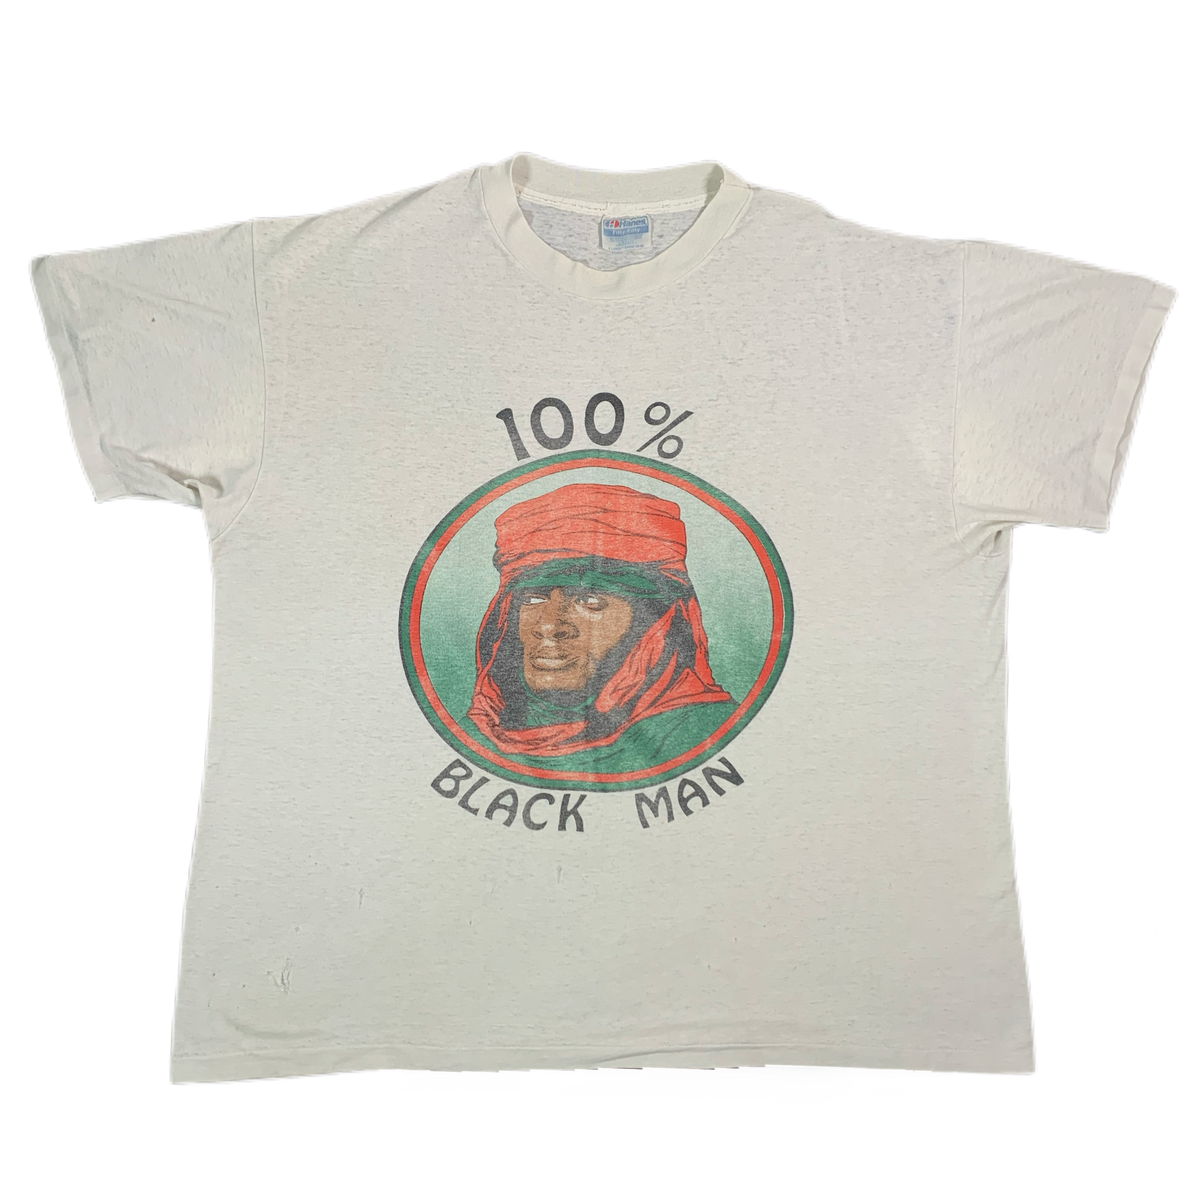 Vintage 100% Black Man “Just Do It!” T-Shirt - jointcustodydc